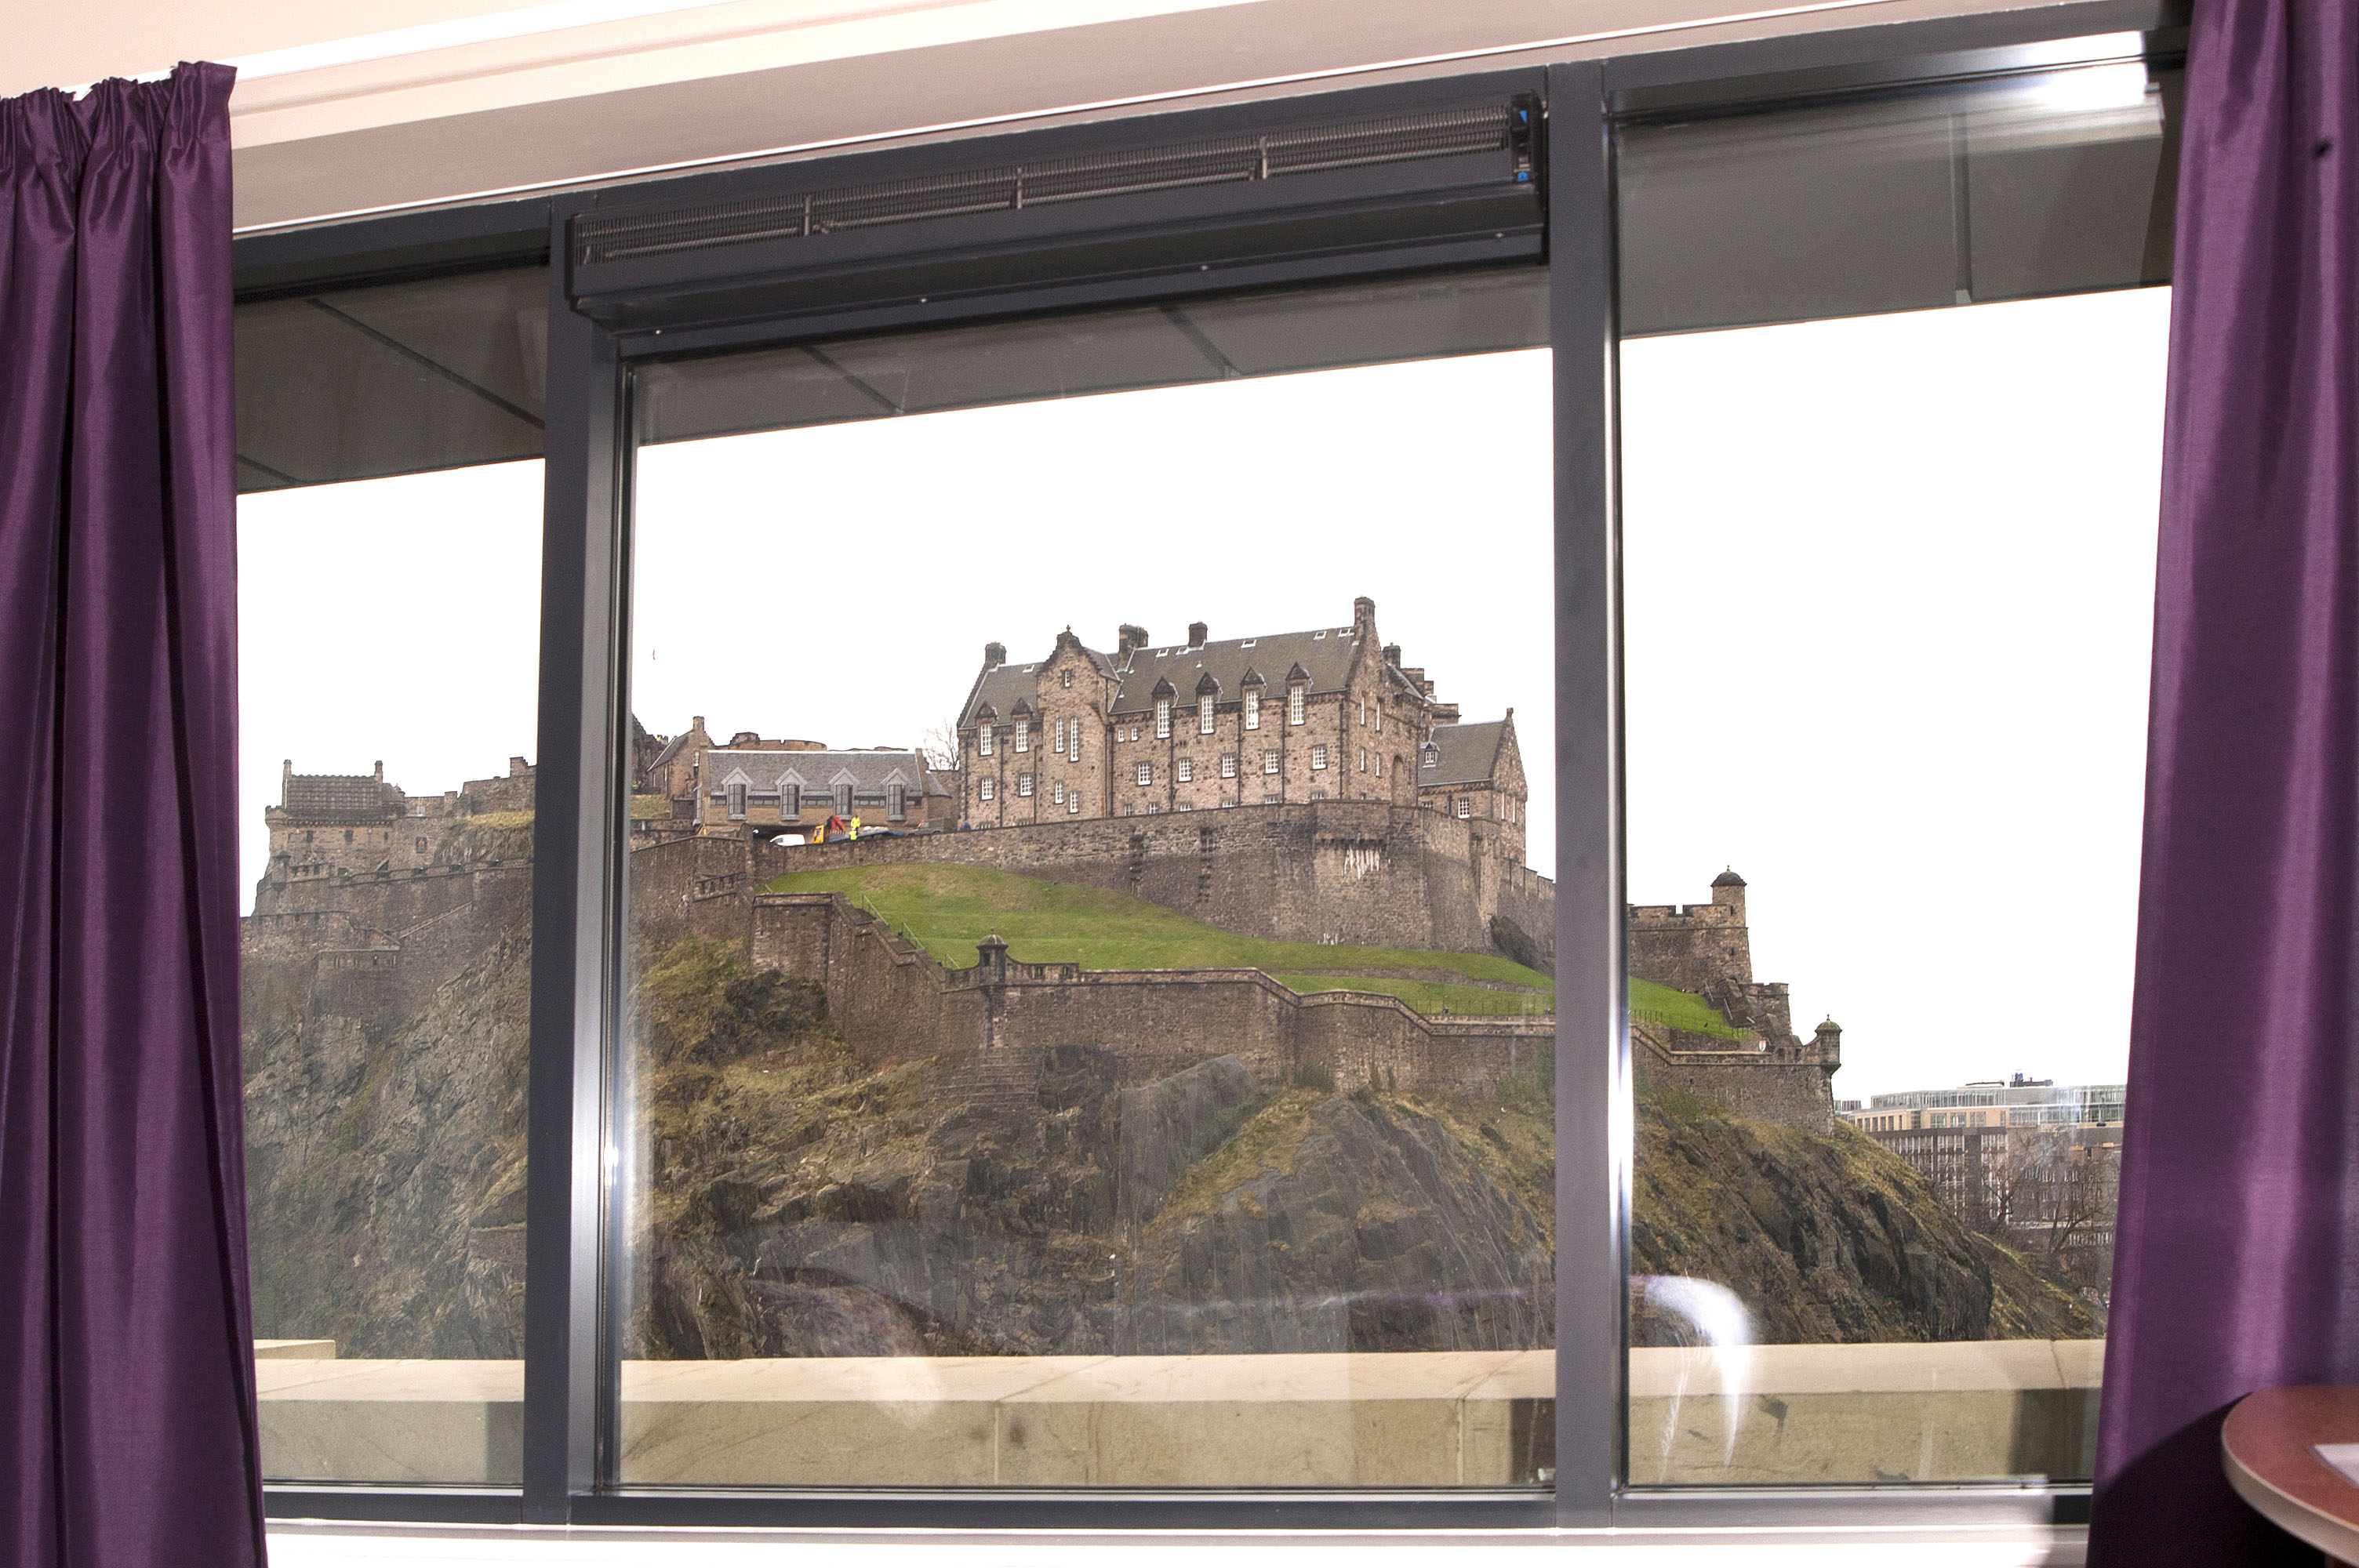 Premier Inn set to open four new hotels in Scotland